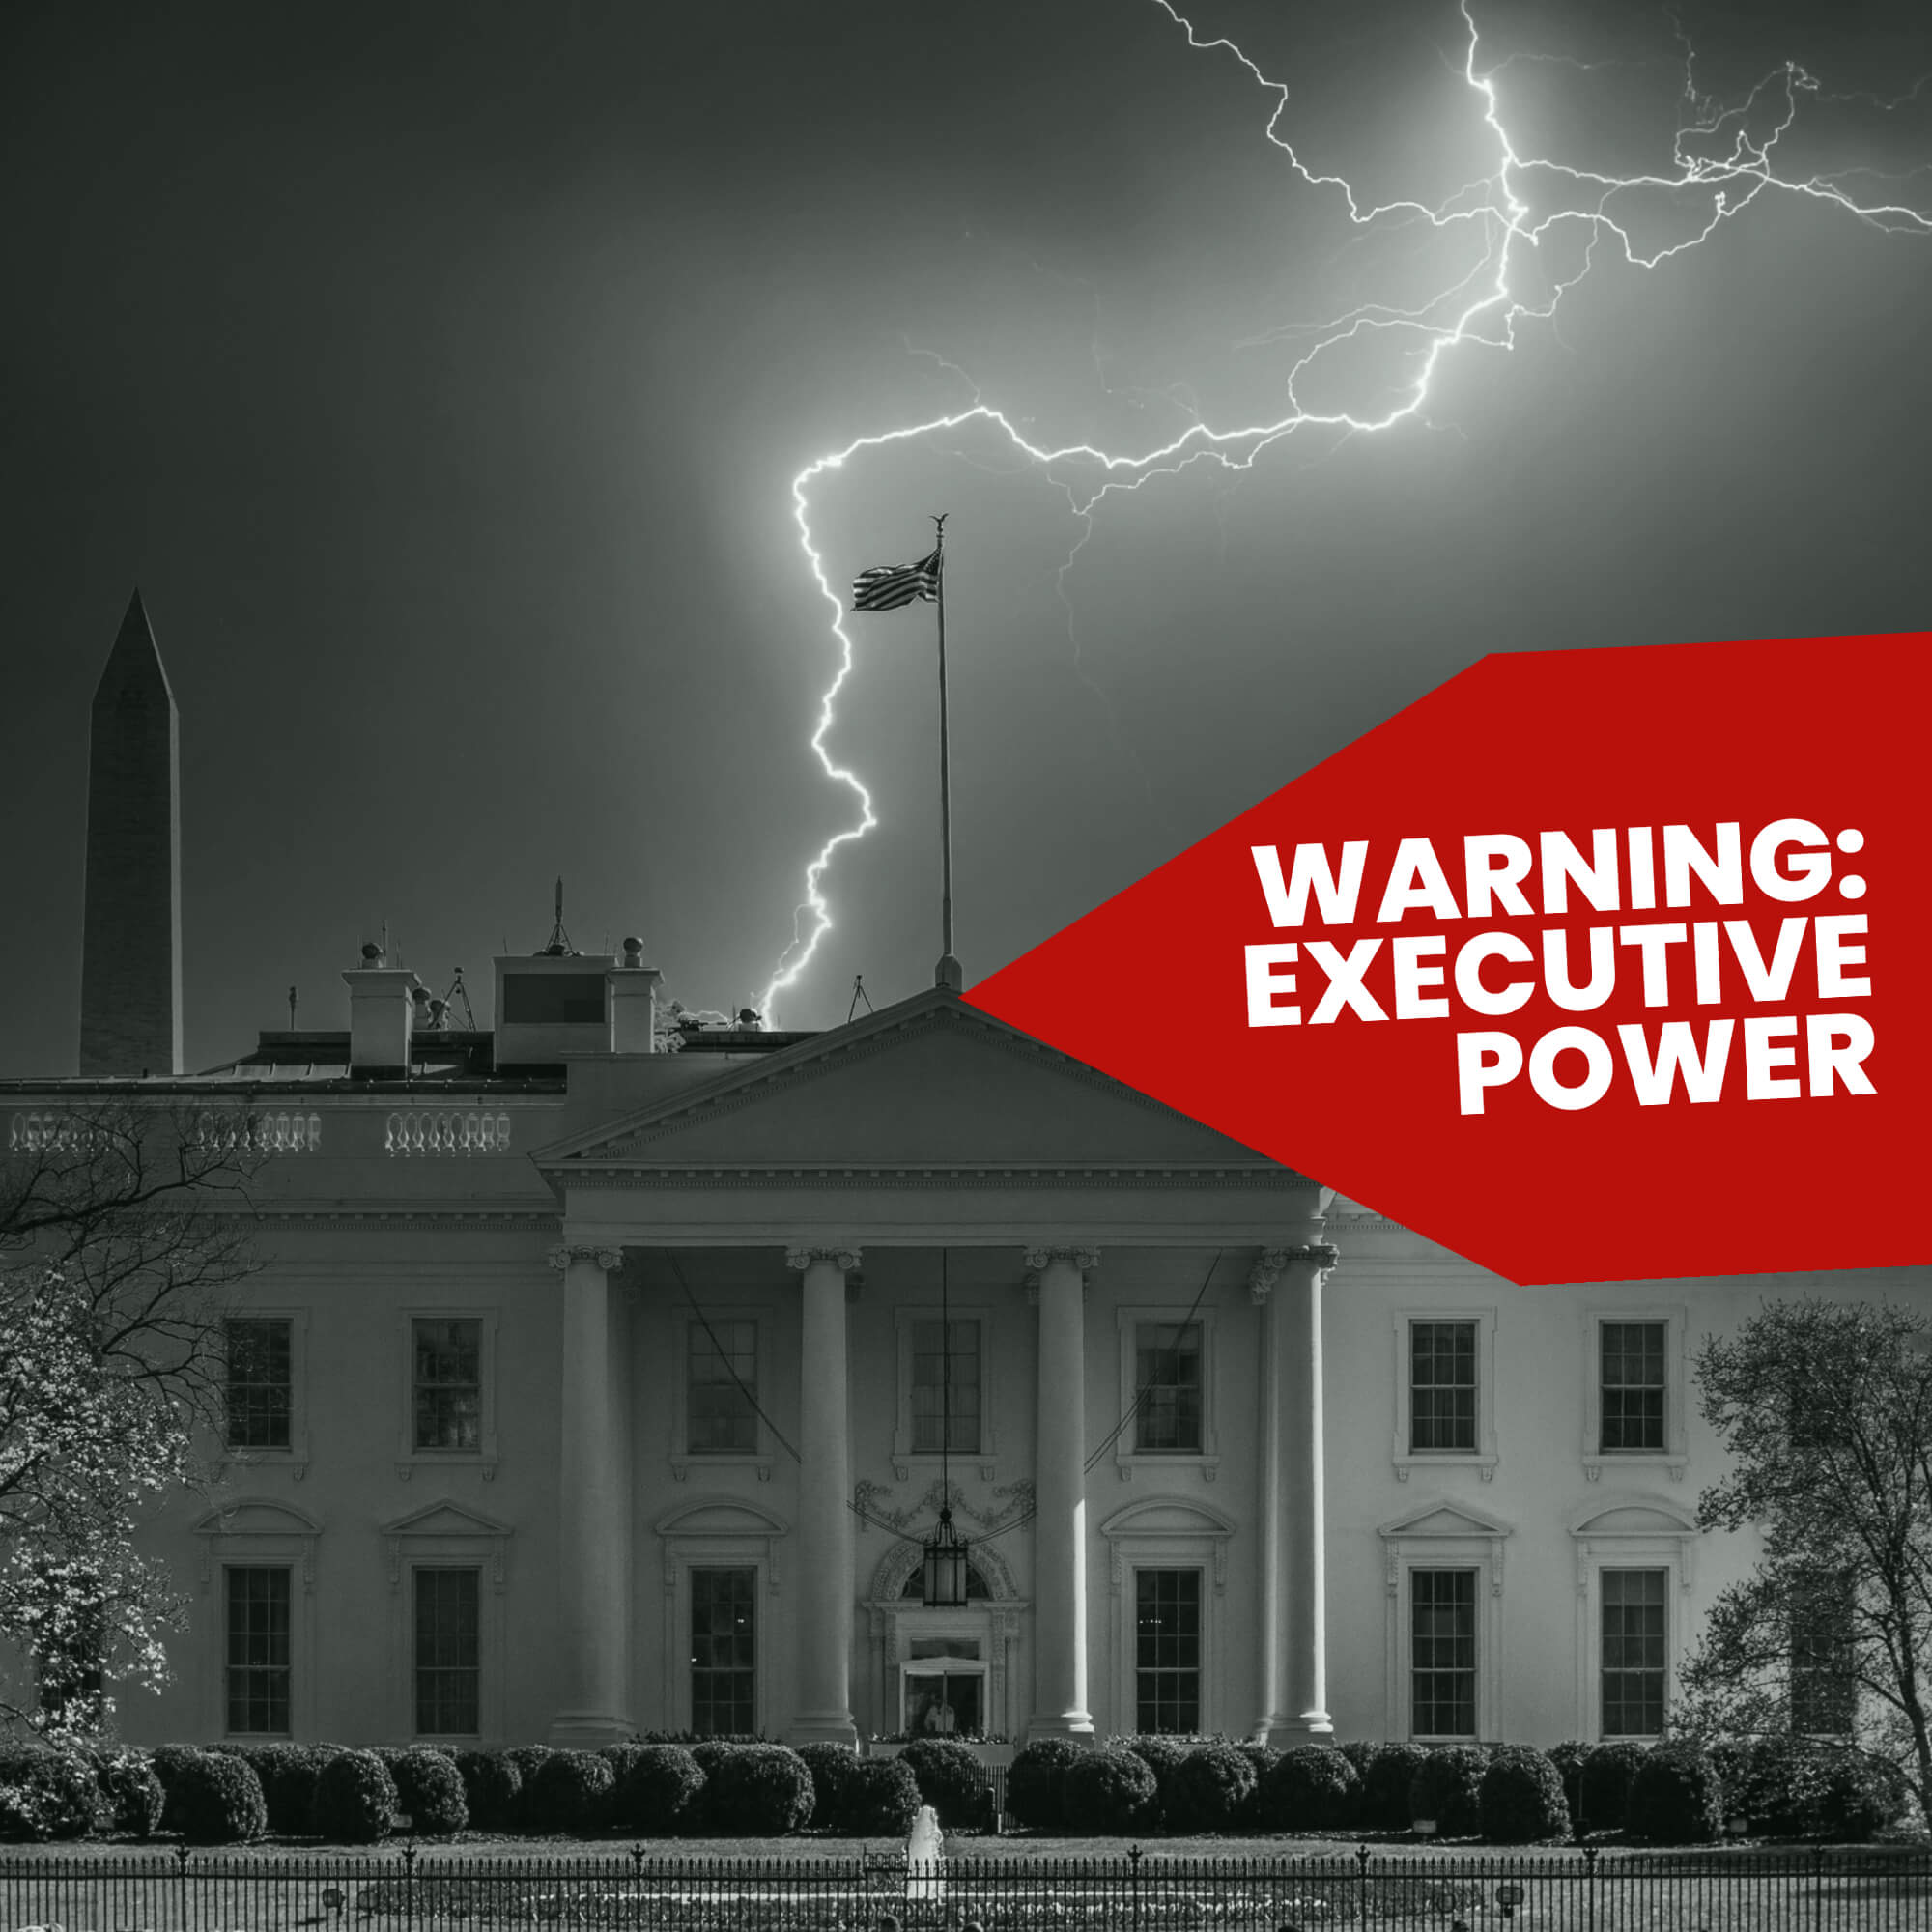 Executive Power Warnings